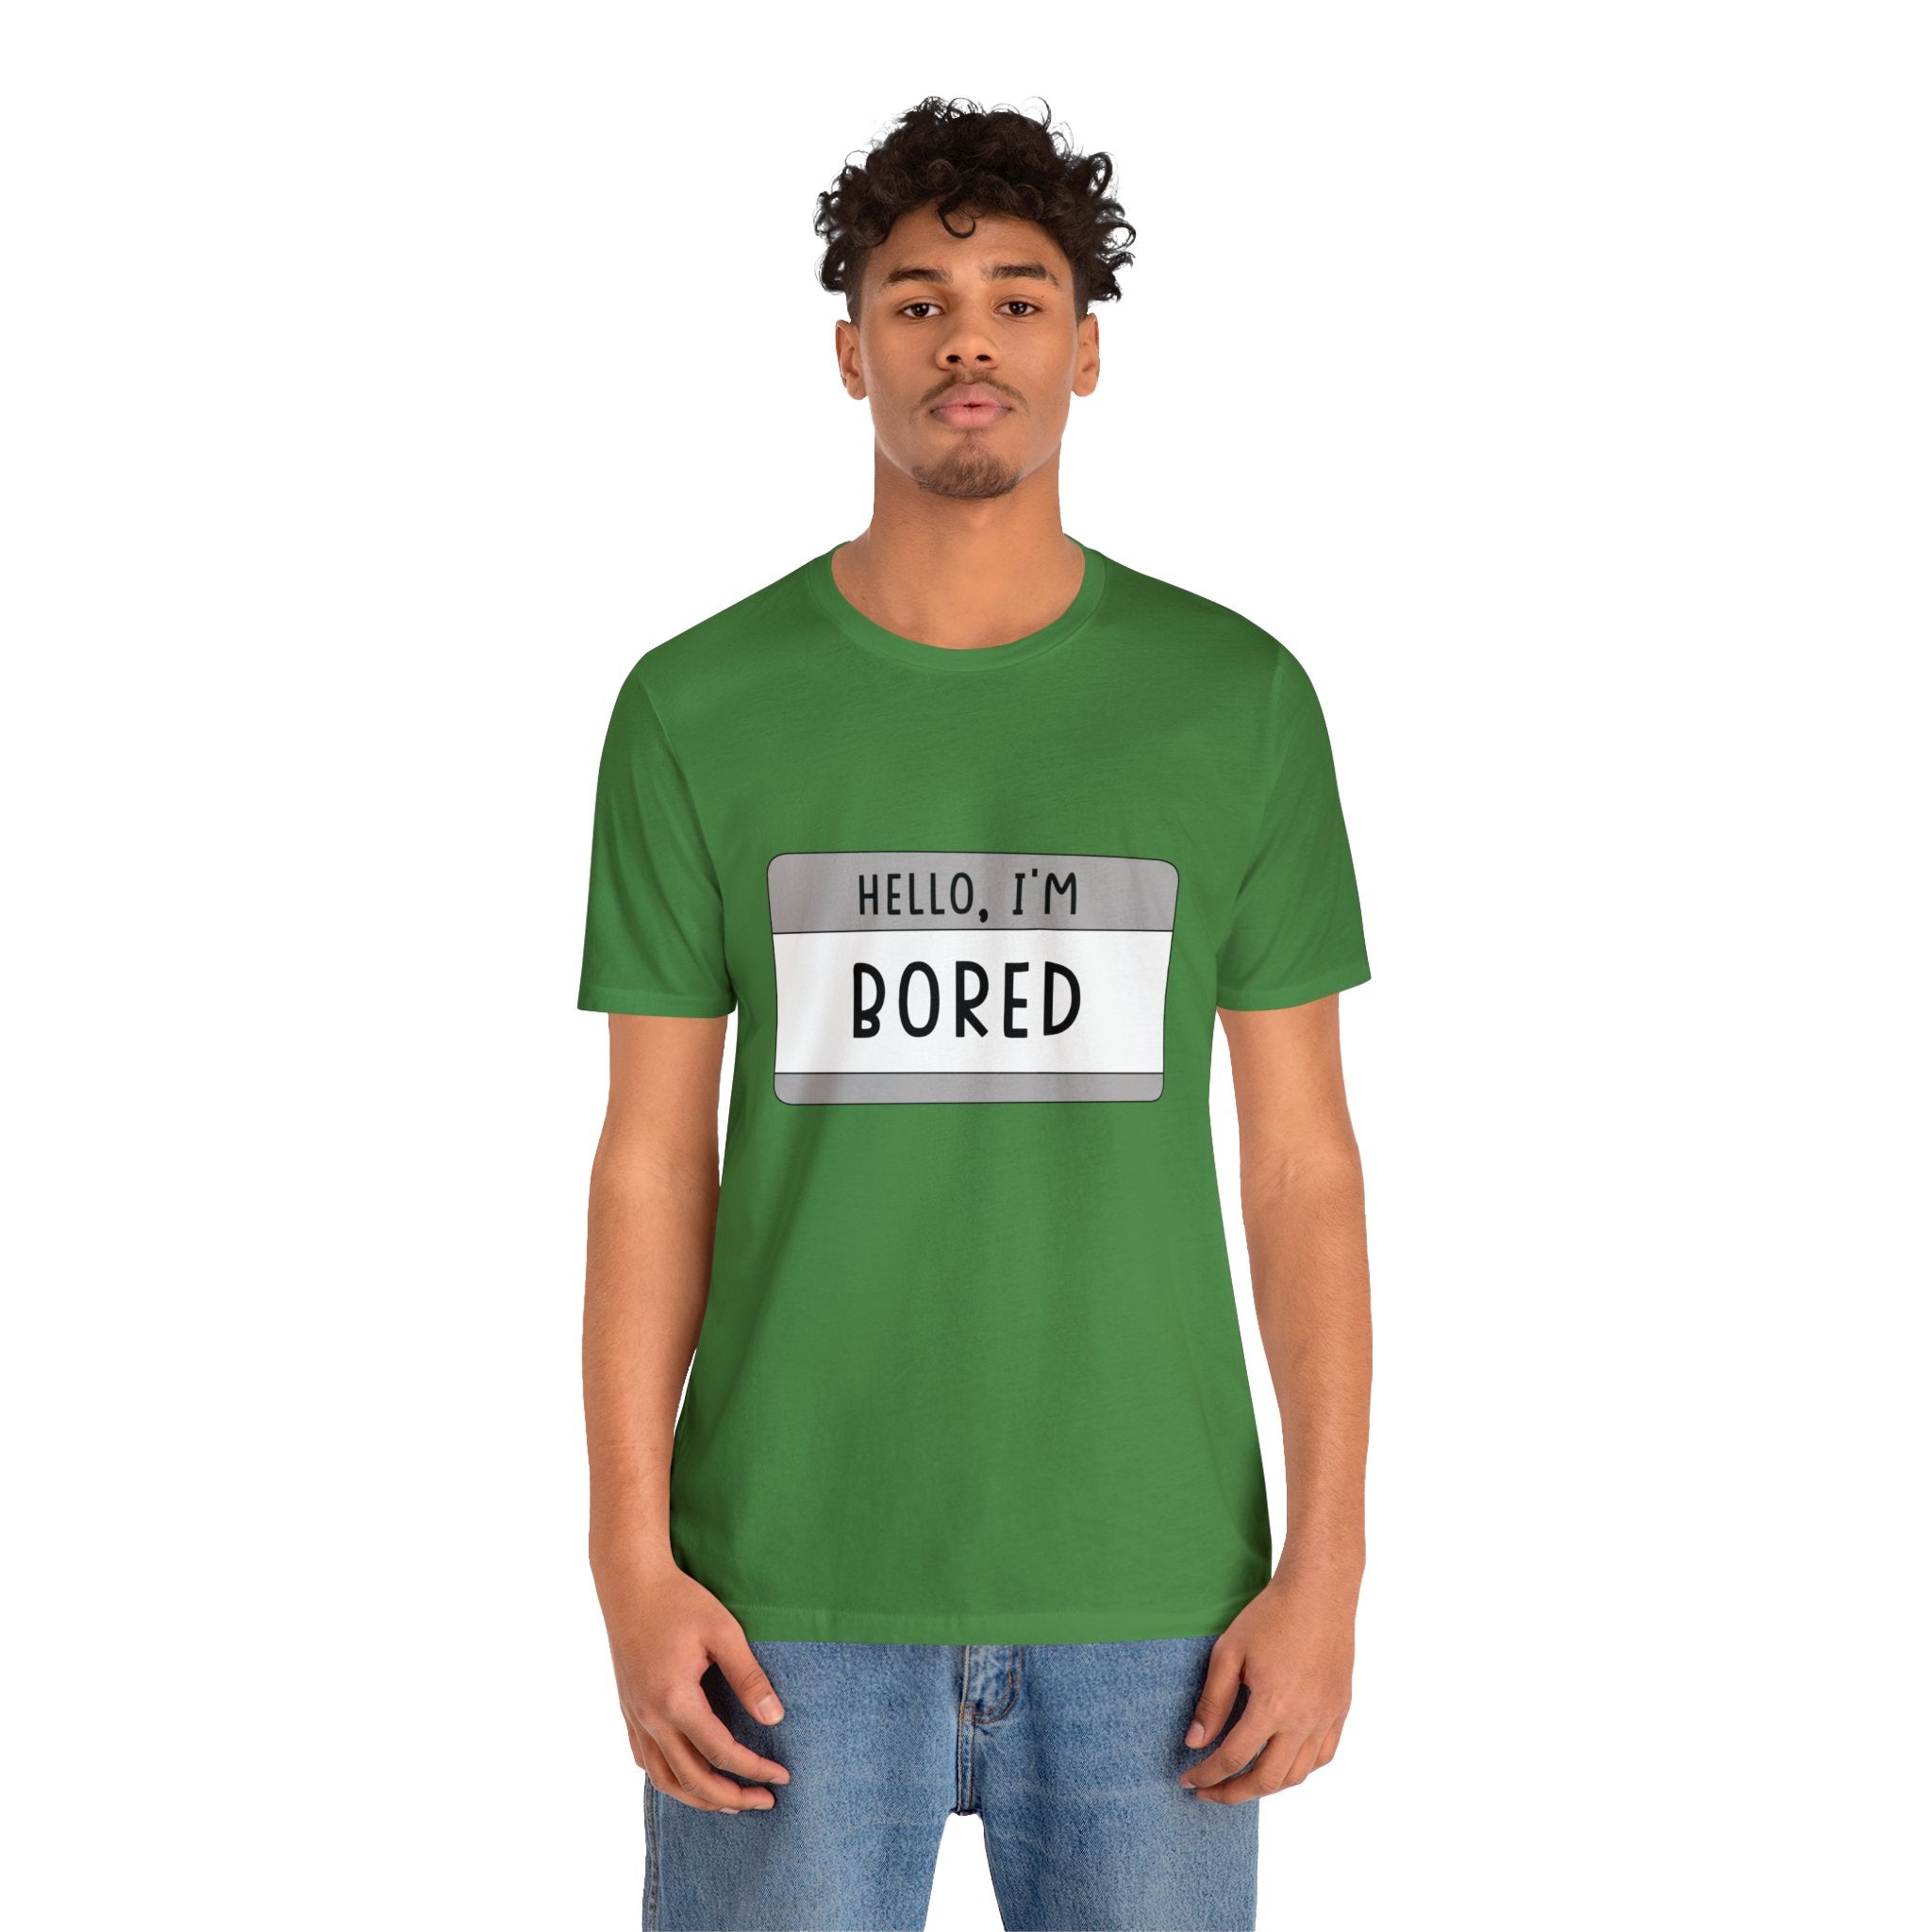 A man in a green tee-shirt reading "Hello, I'm Board T-Shirt".